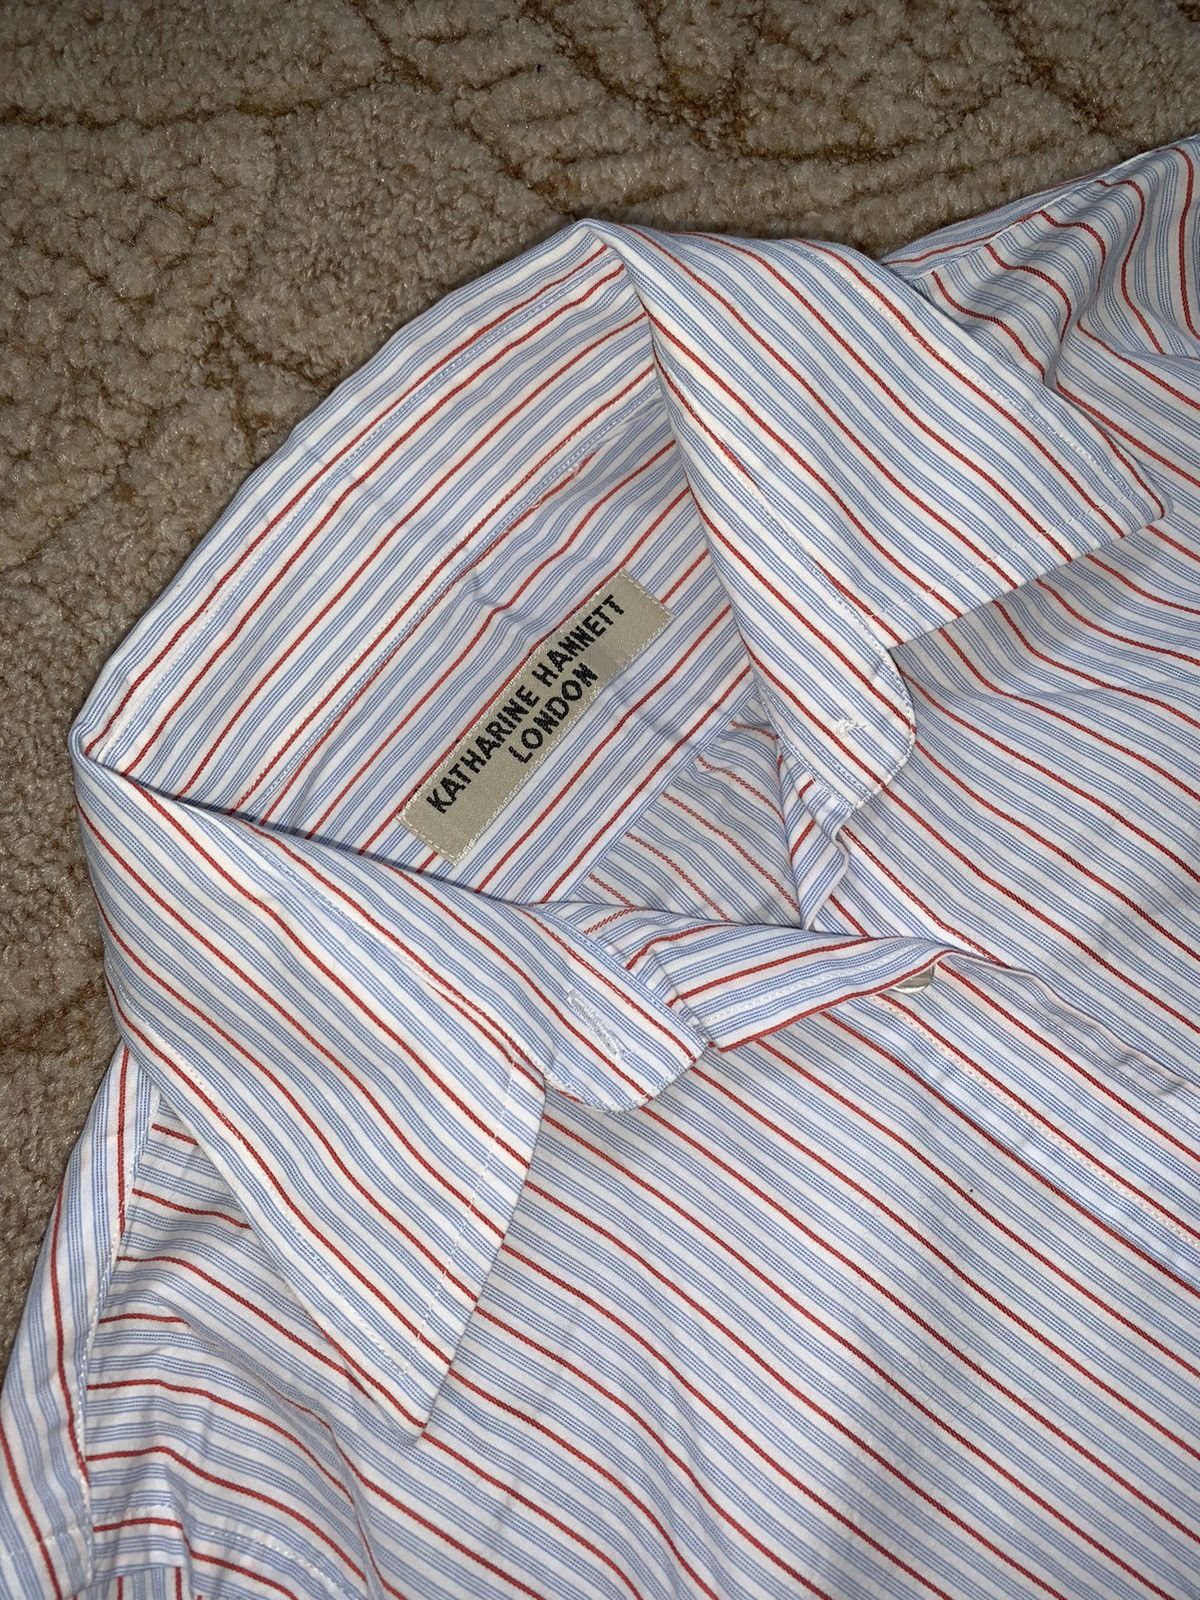 Katharine Hamnett London Katharine hannett London shirts long sleeve blouses Women M Size M / US 6-8 / IT 42-44 - 6 Thumbnail